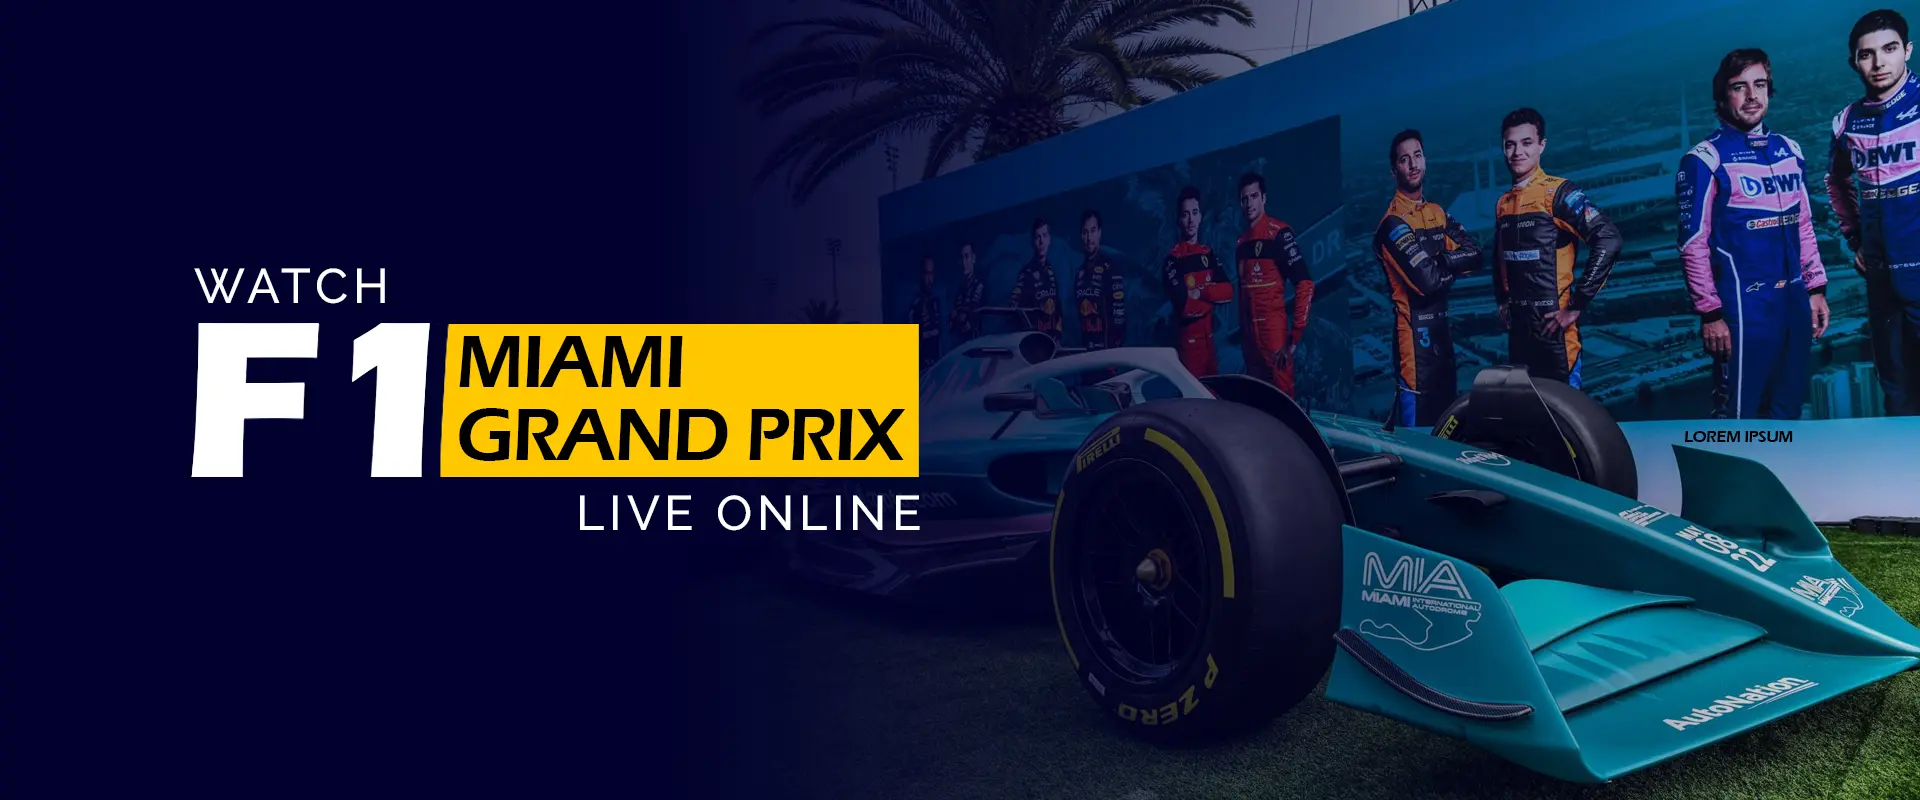 Watch F1 Miami Grand Prix Live Online